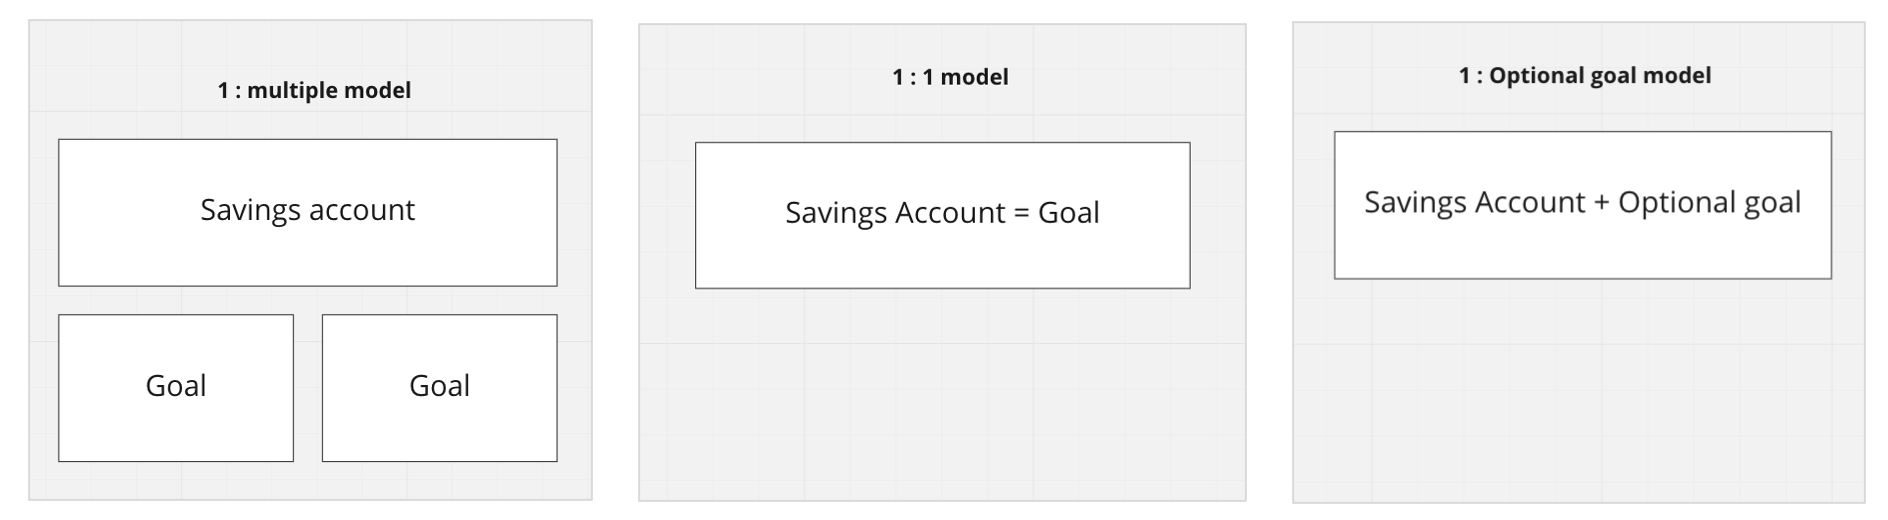 savings account conceptual model